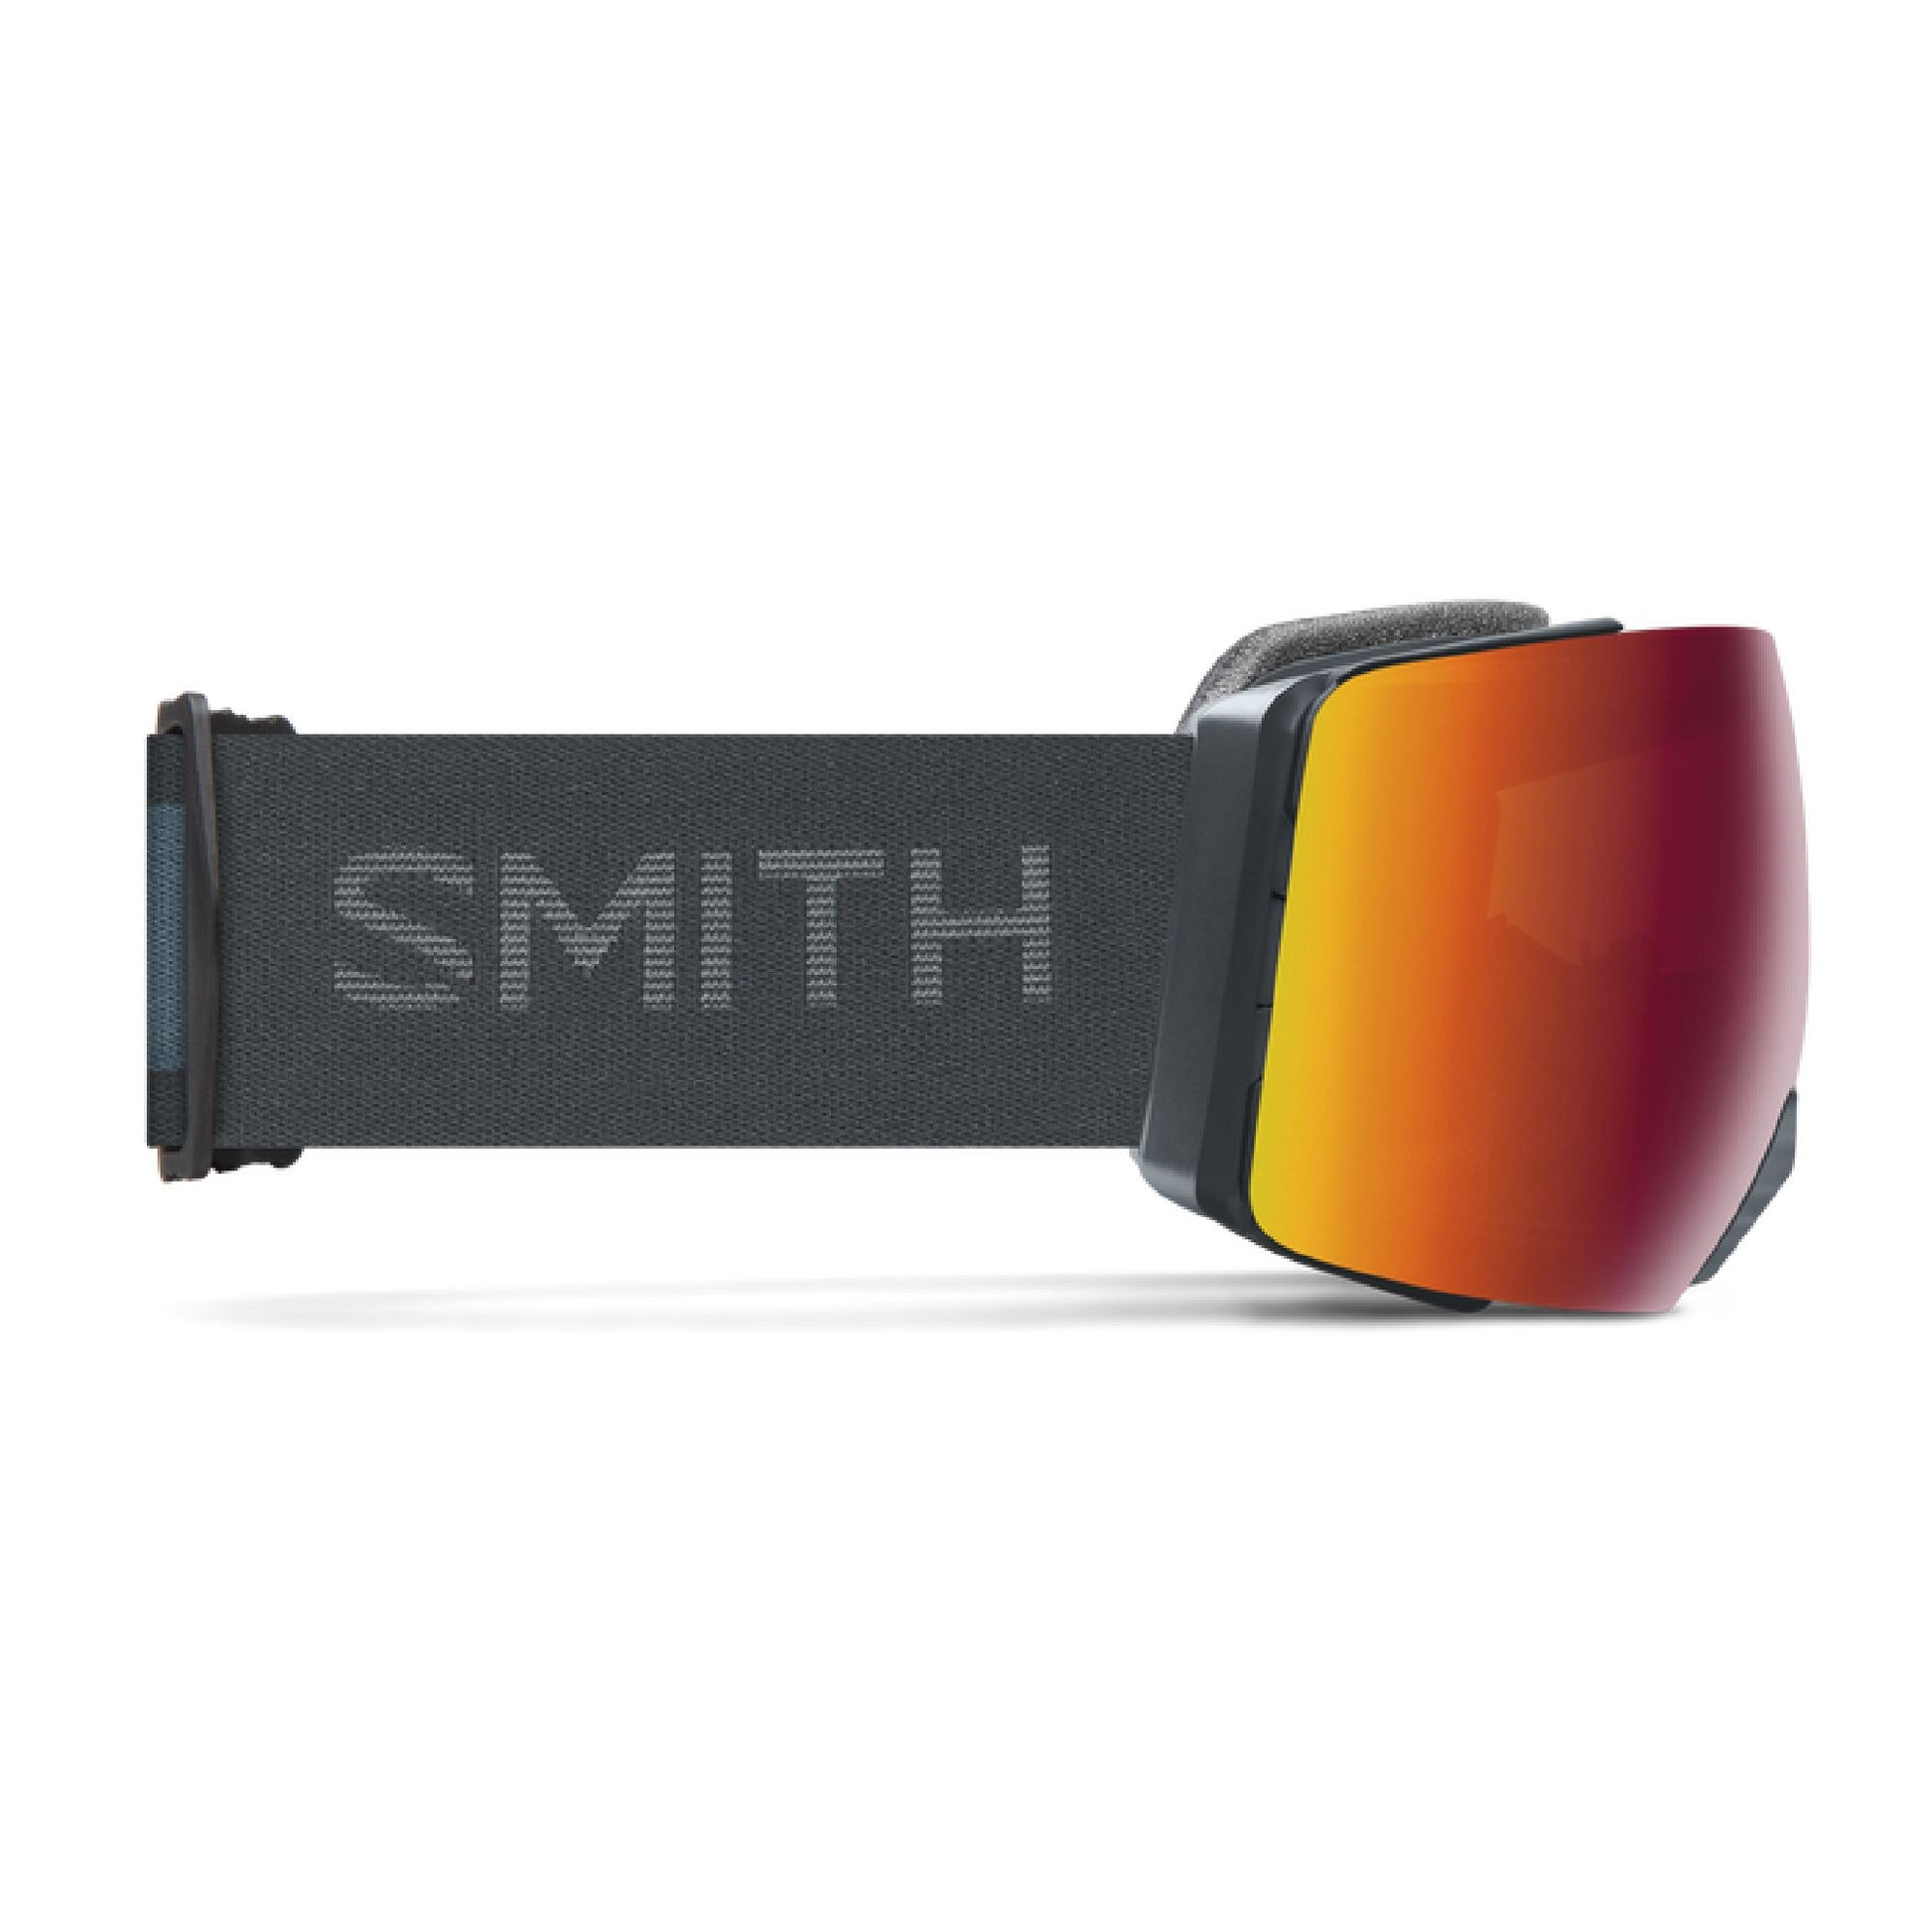 Smith I/O MAG XL Low Bridge Fit Snow Goggle Slate ChromaPop Everyday Red Mirror Snow Goggles